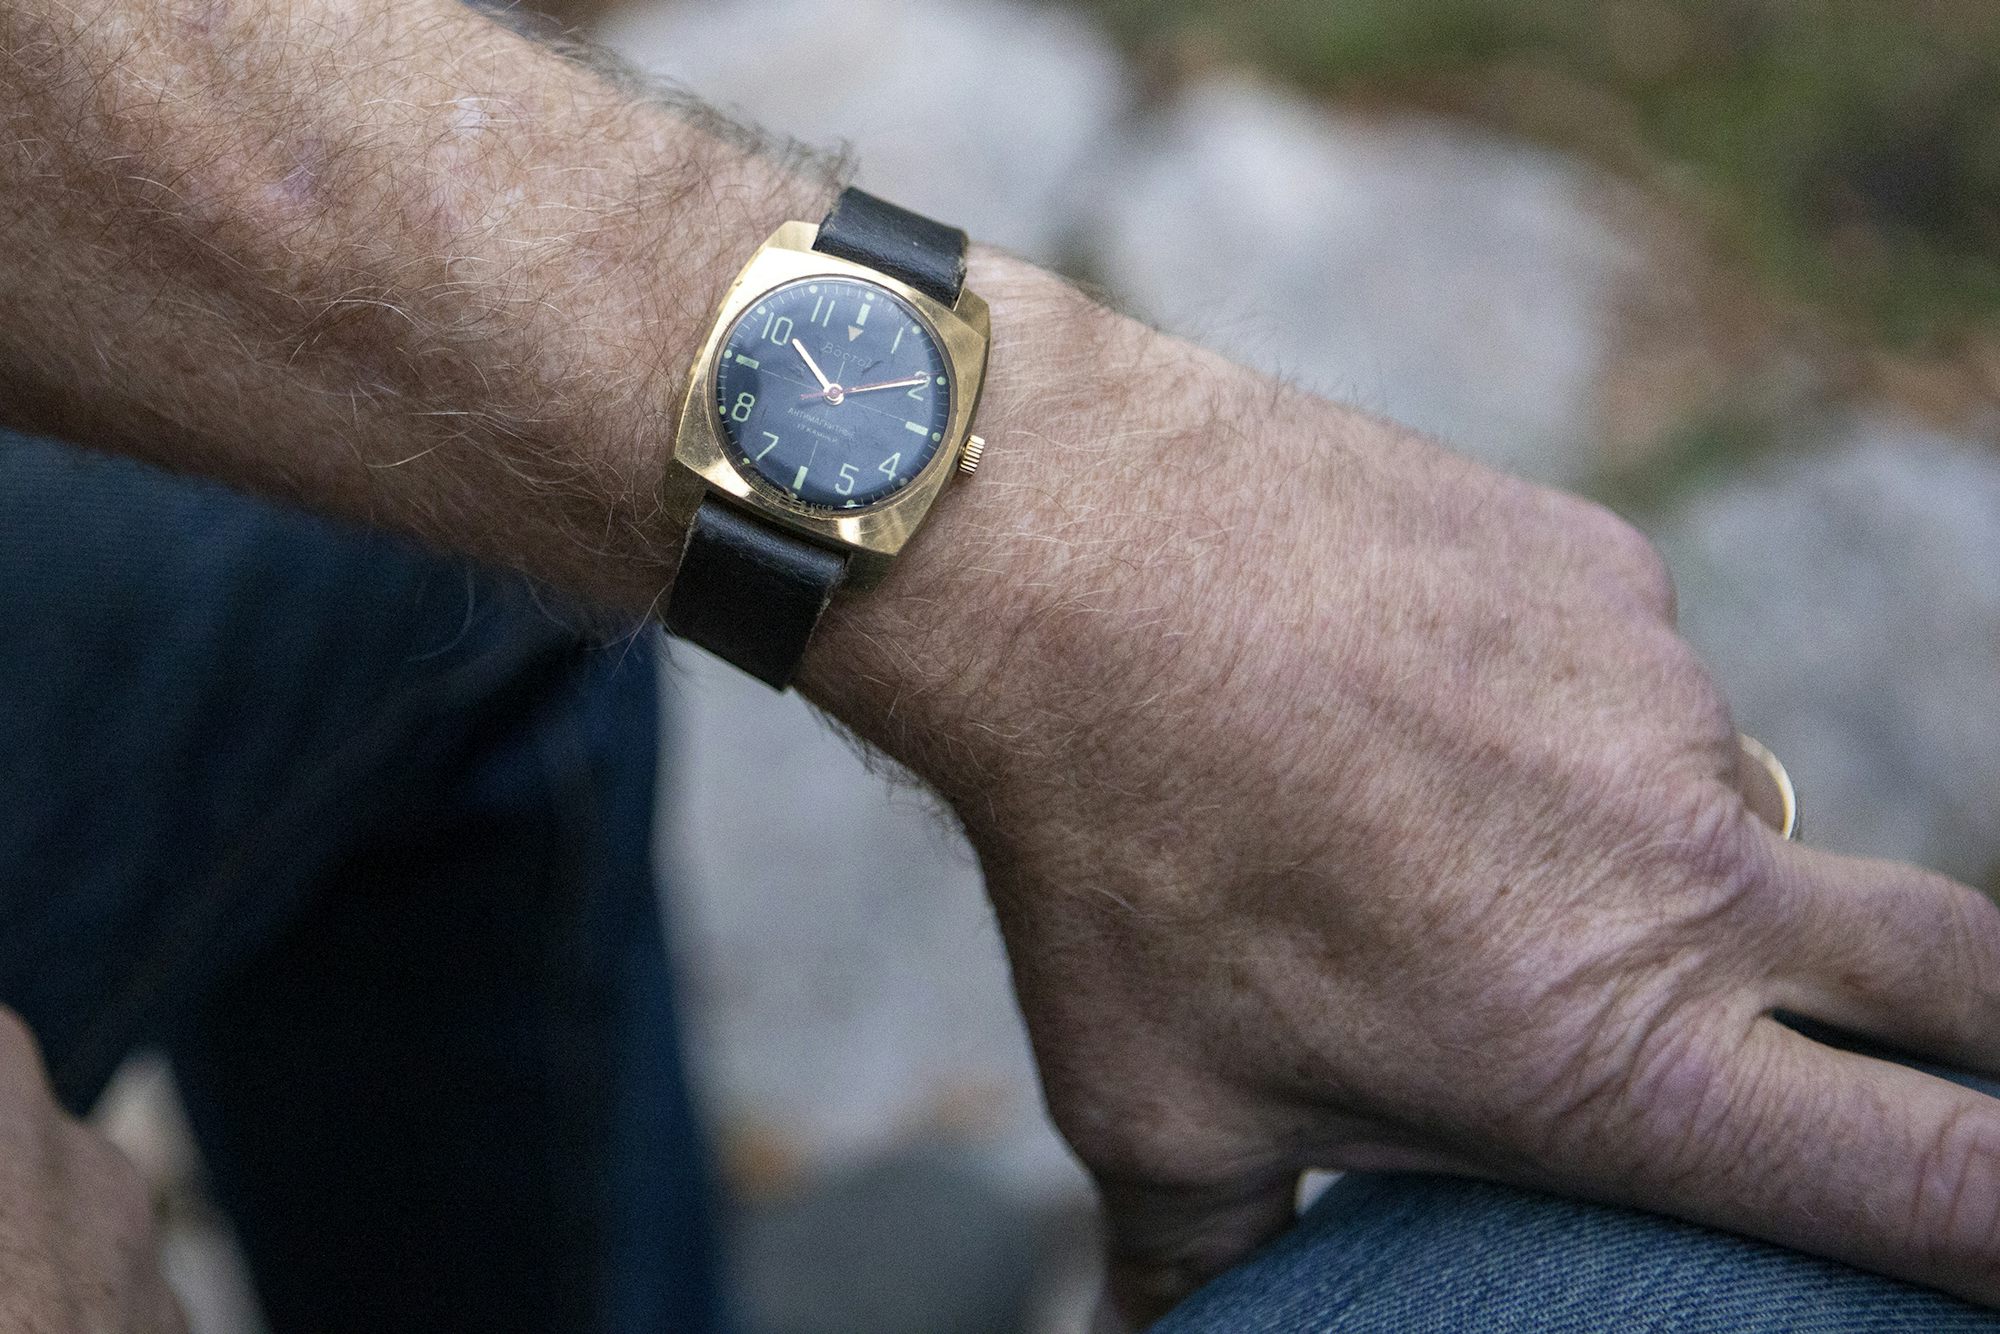 A black wristwatch